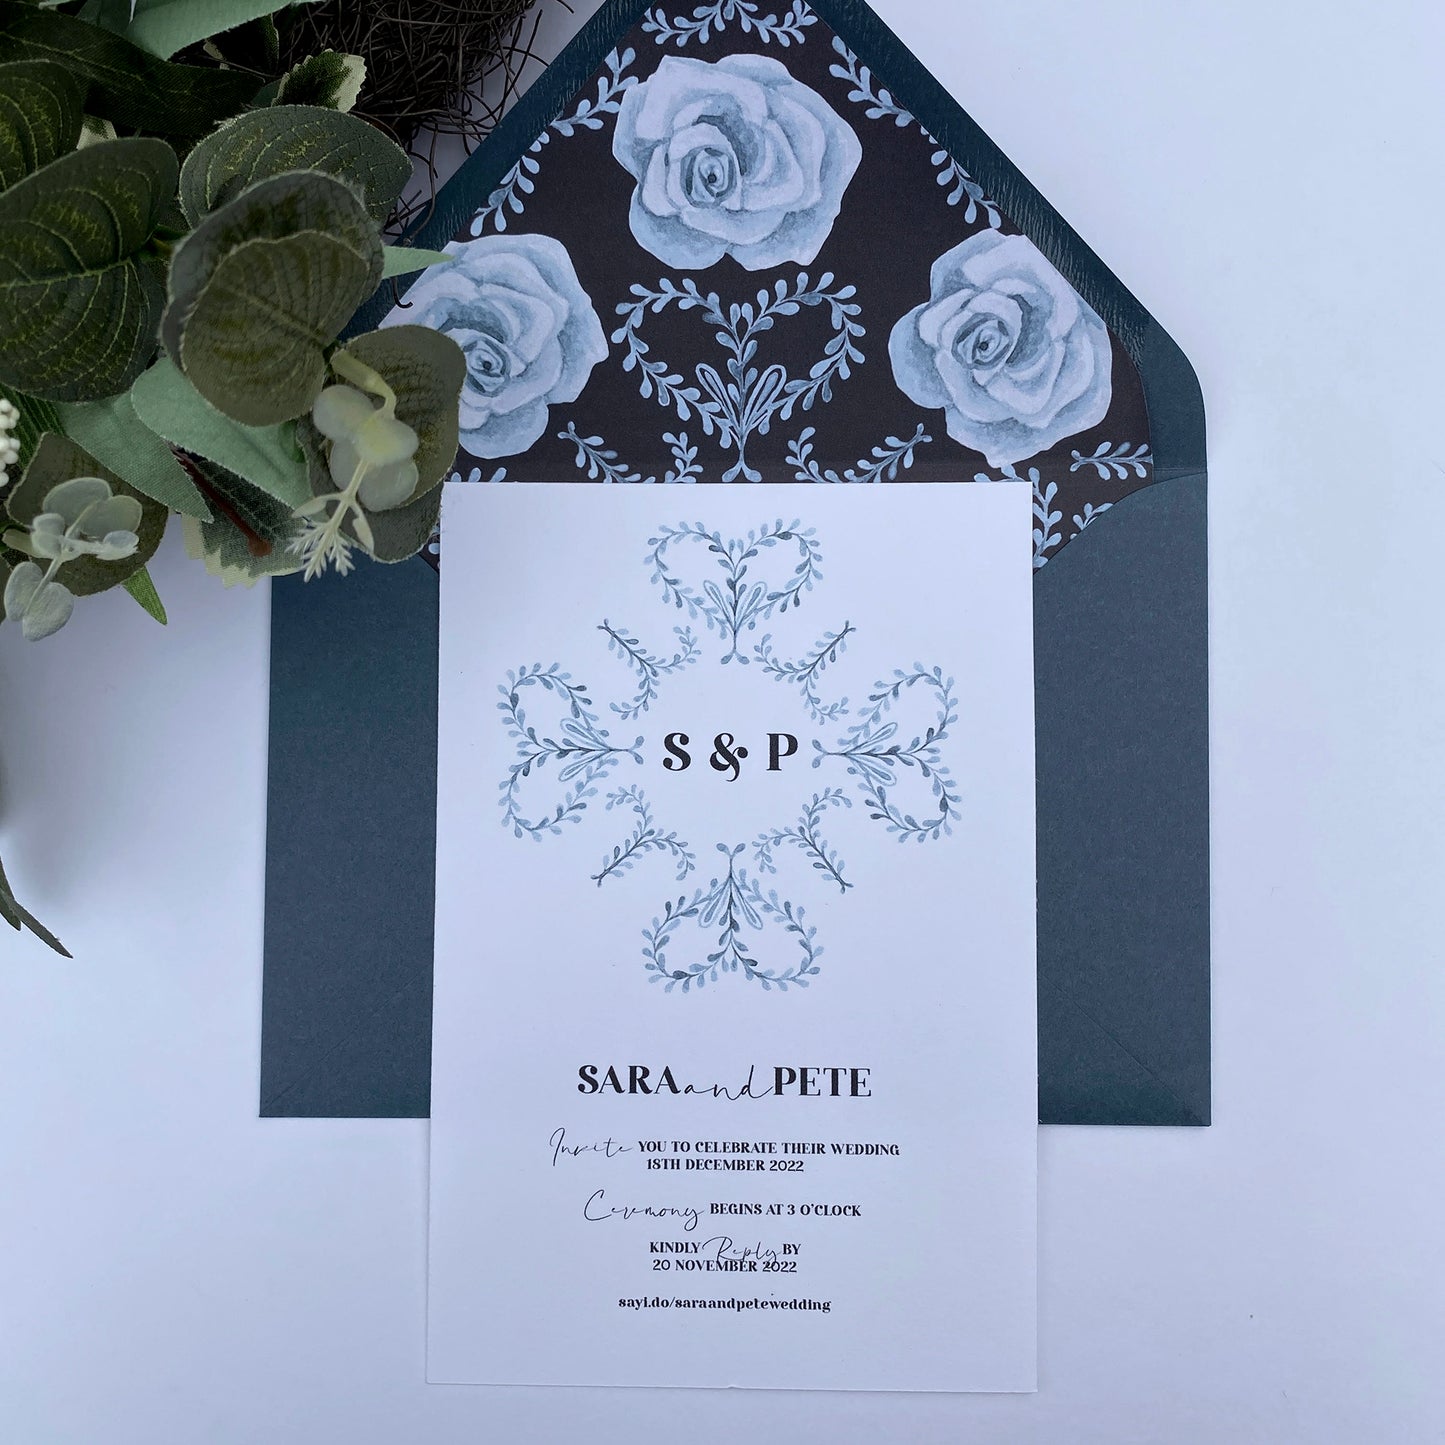 SARA Design Invitation